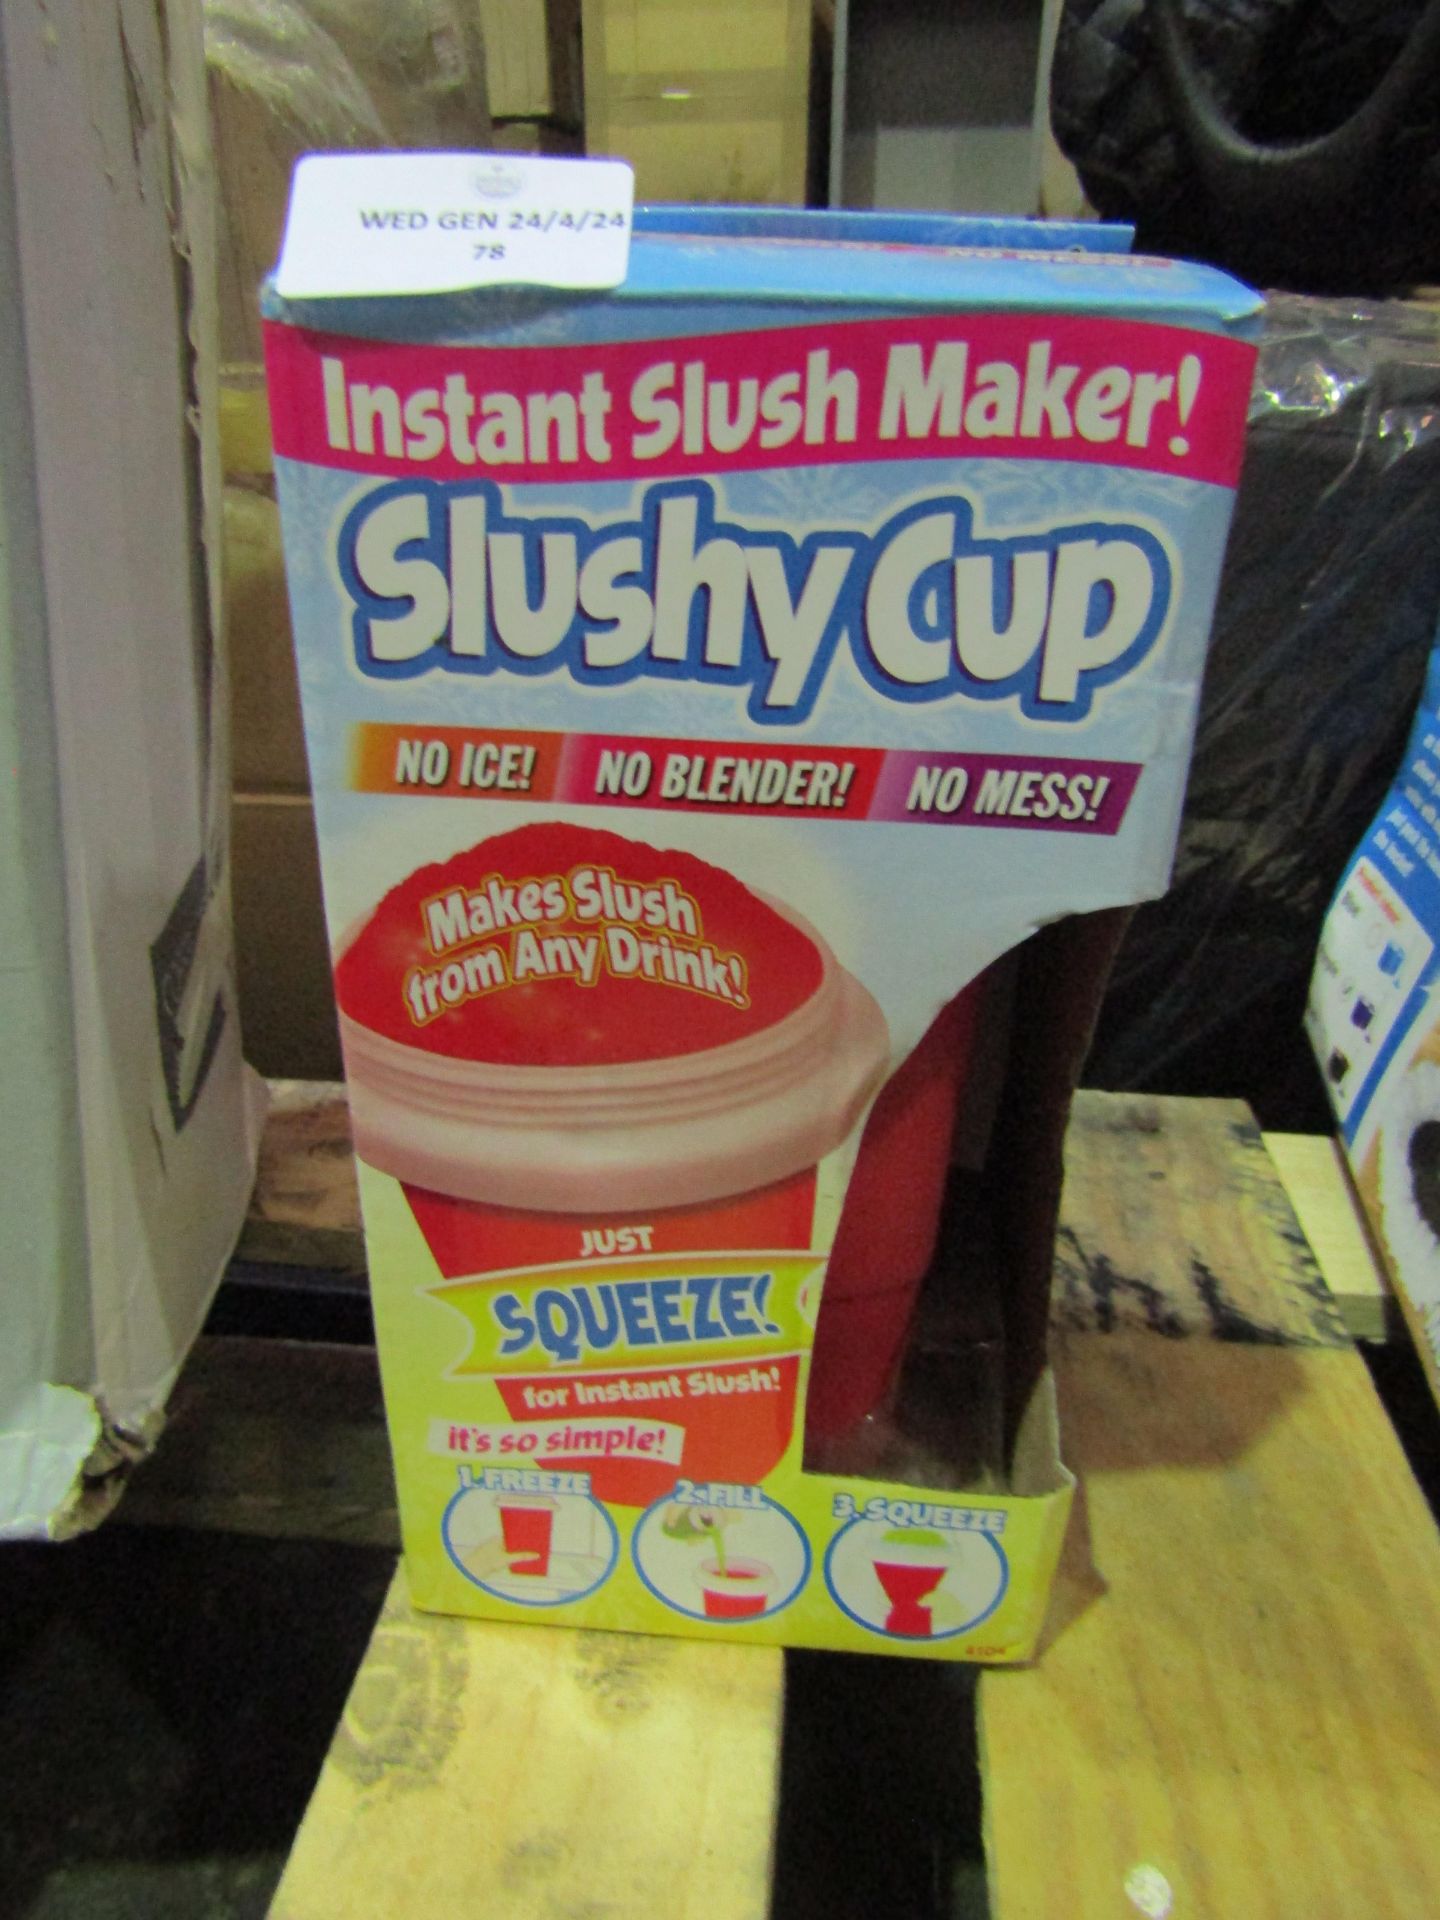 Slushy Cup Unchecked & Boxed